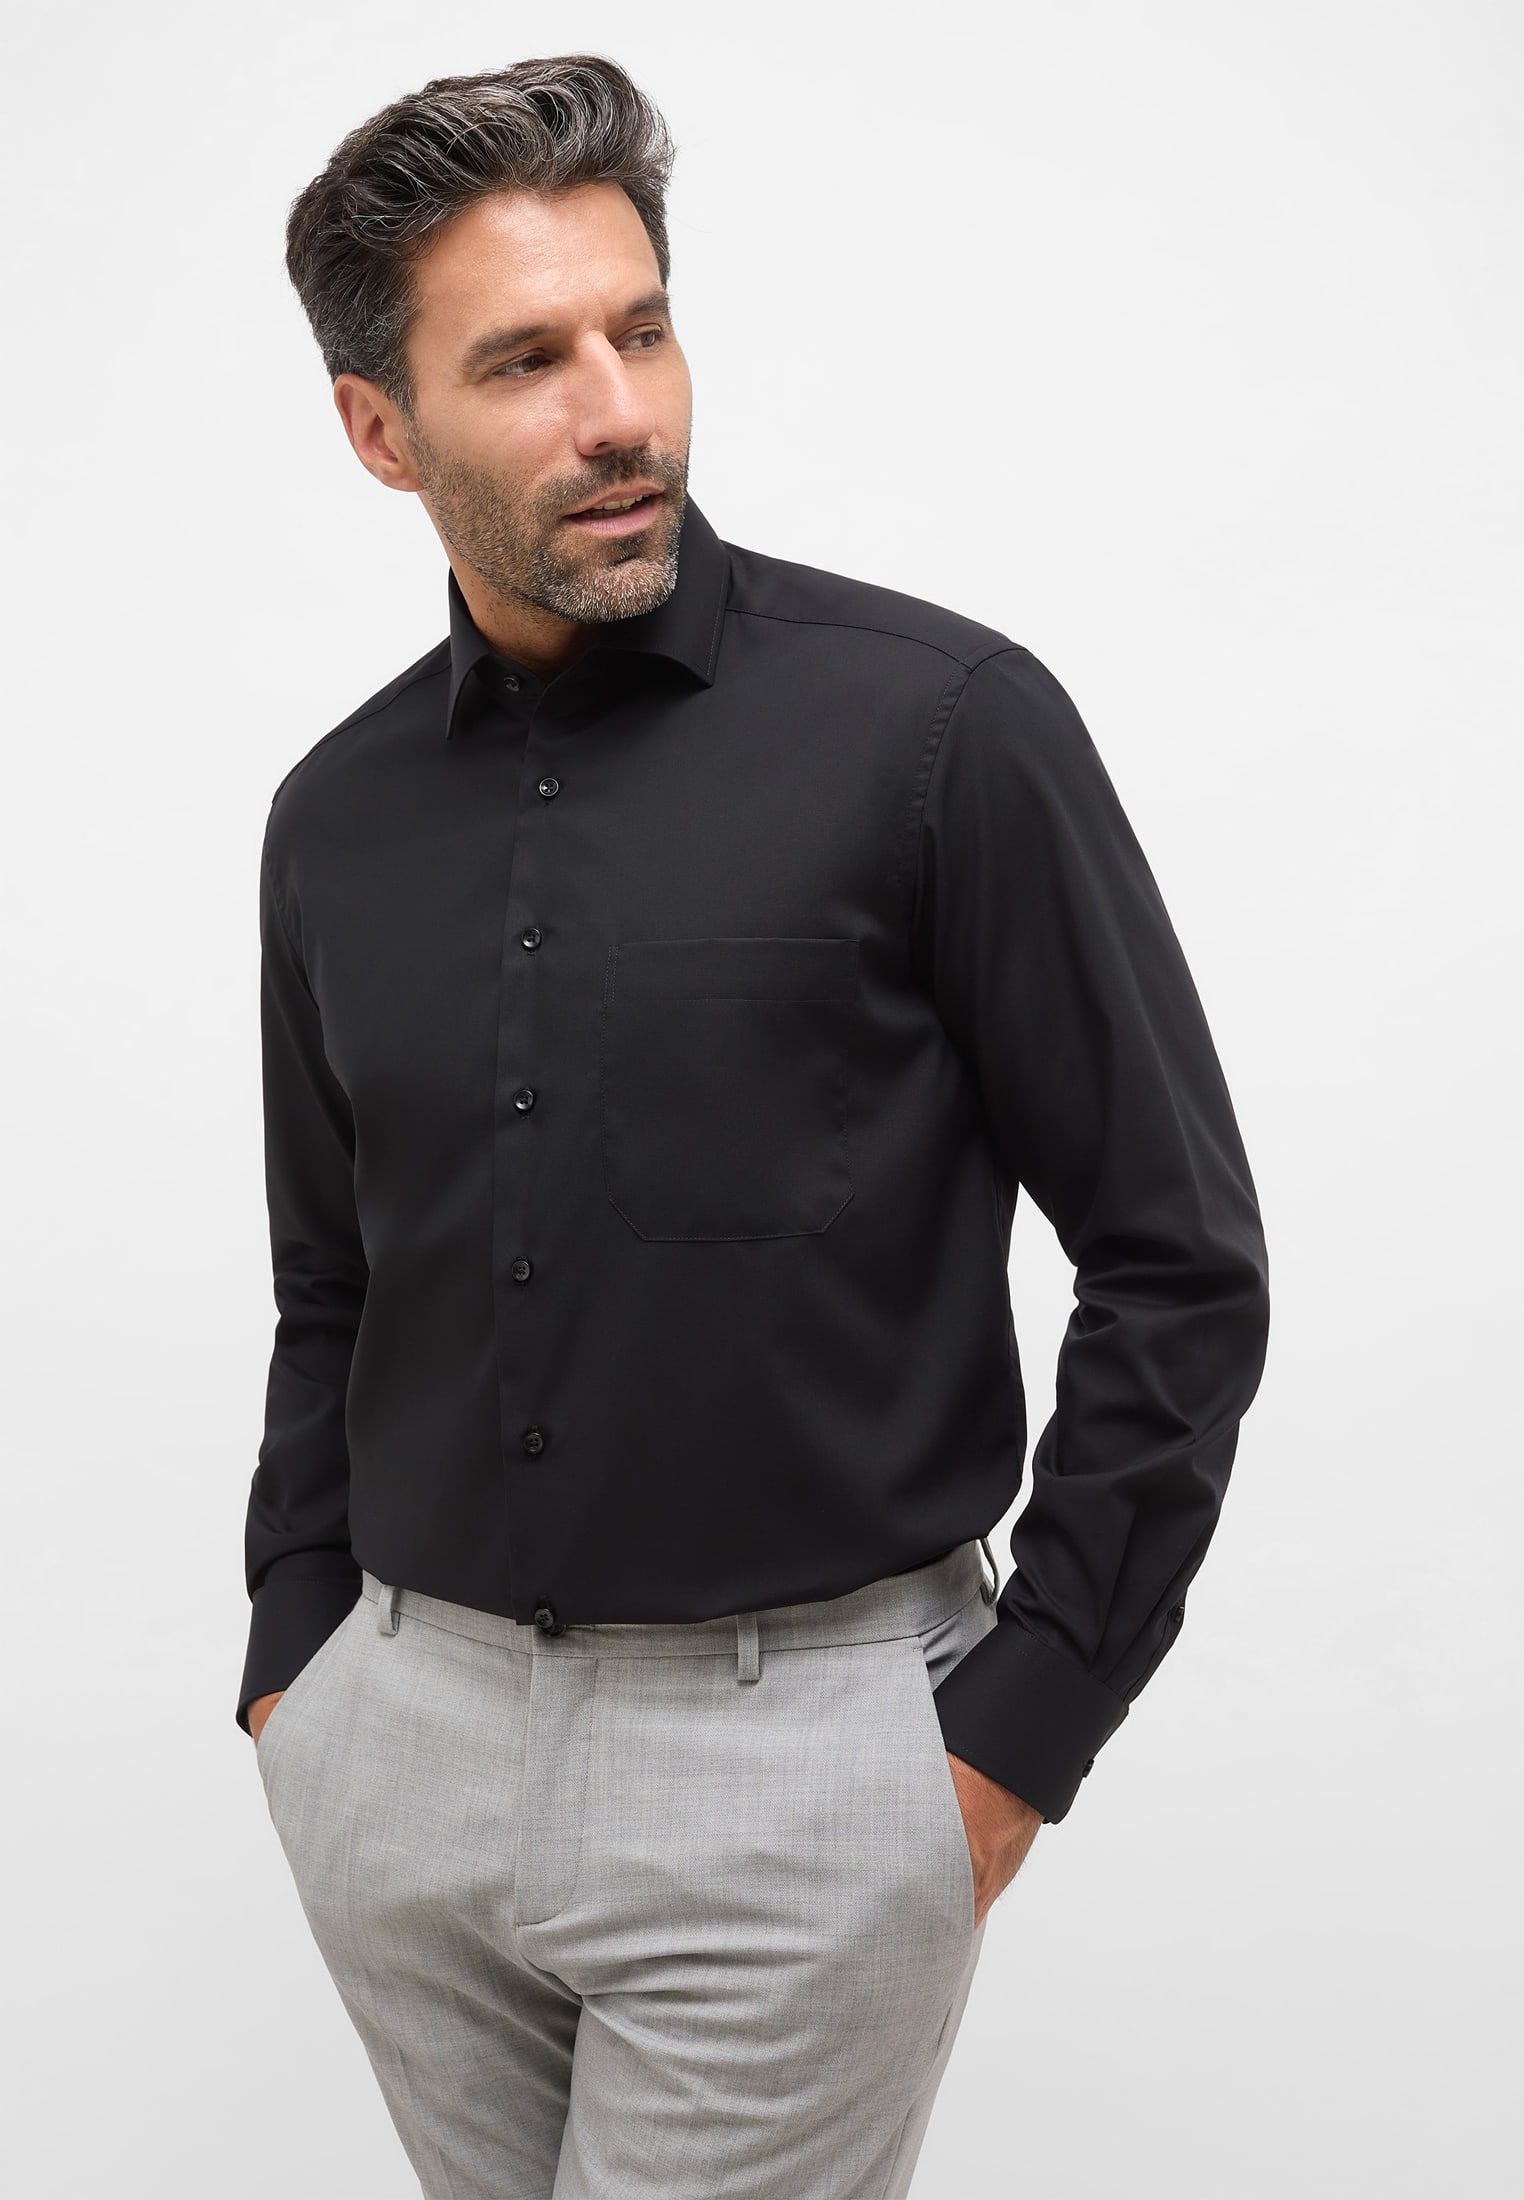 COMFORT FIT Original Shirt in | | Langarm | schwarz unifarben 1SH11781-03-91-45-1/1 | schwarz 45